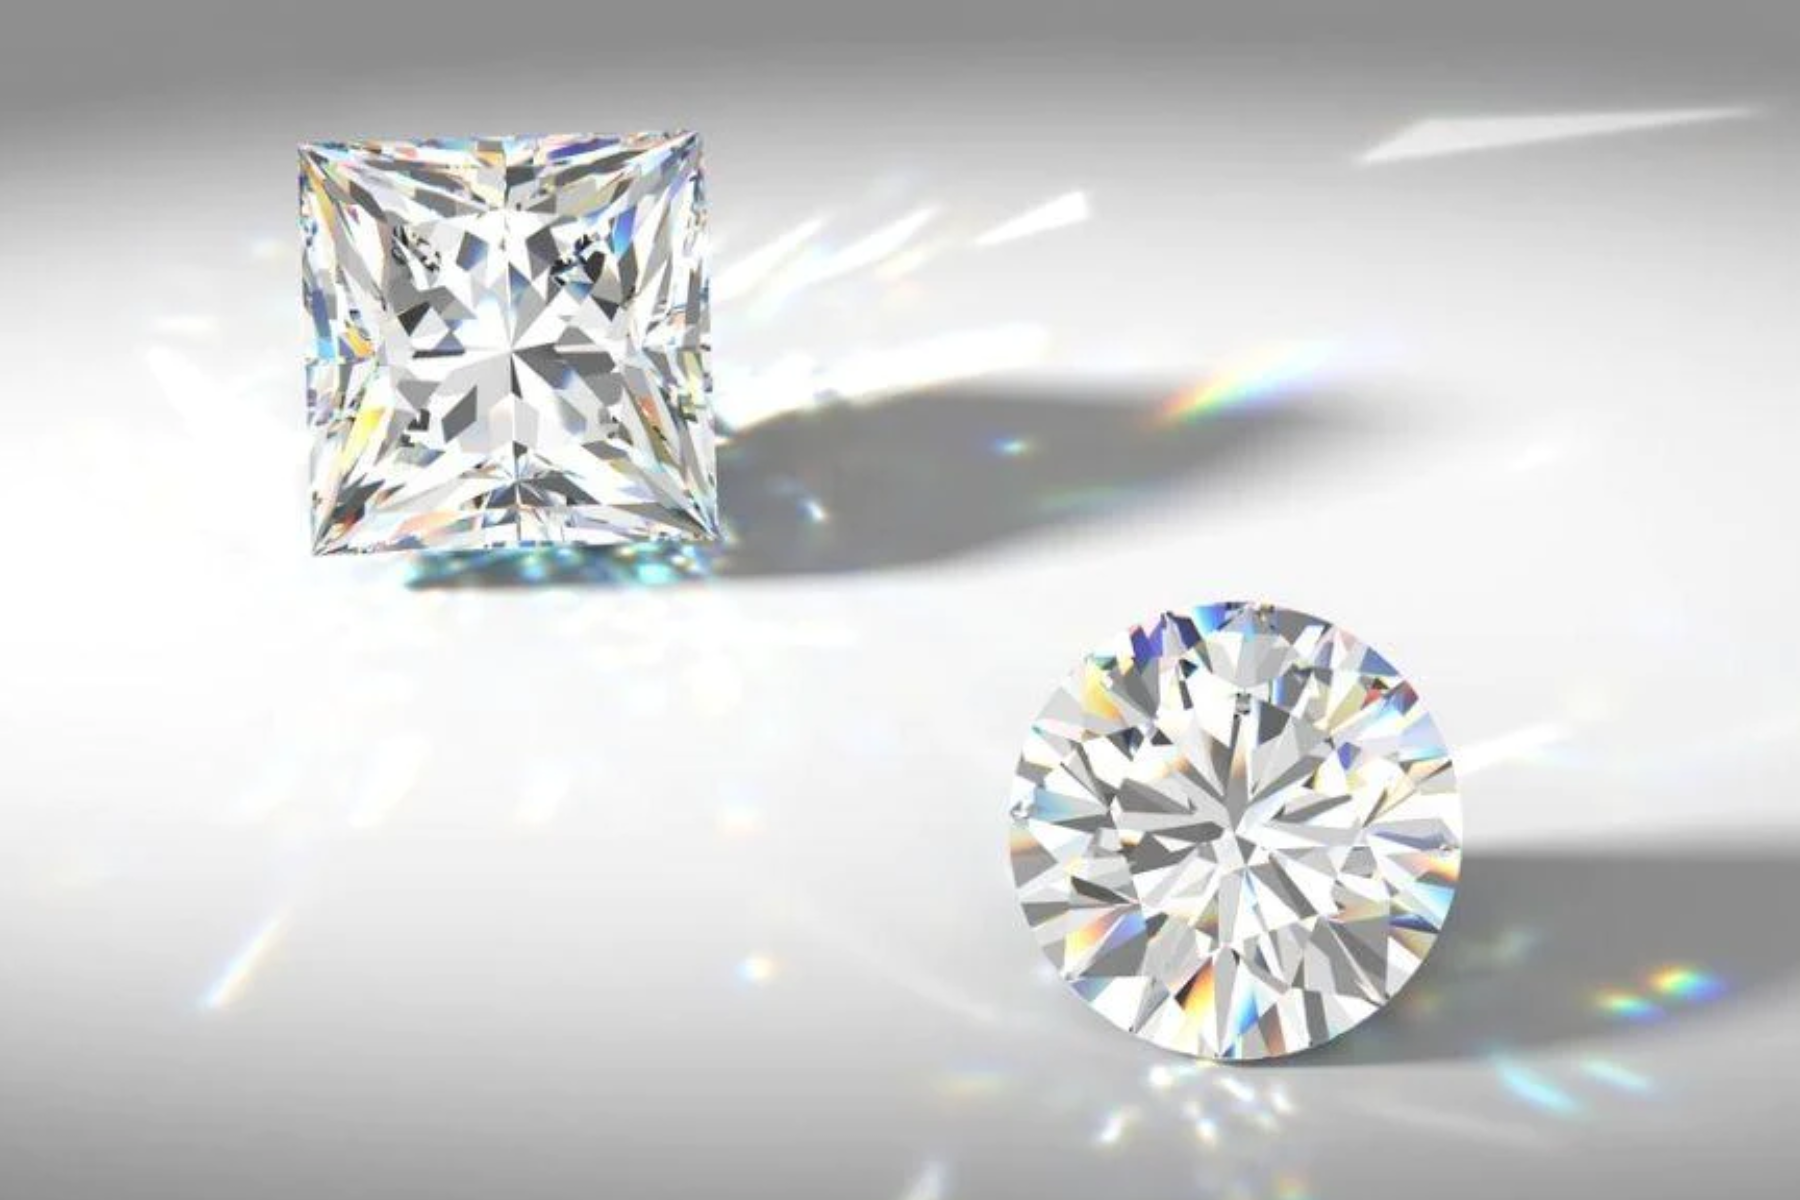 Princess Cut and Round Cut diamonds